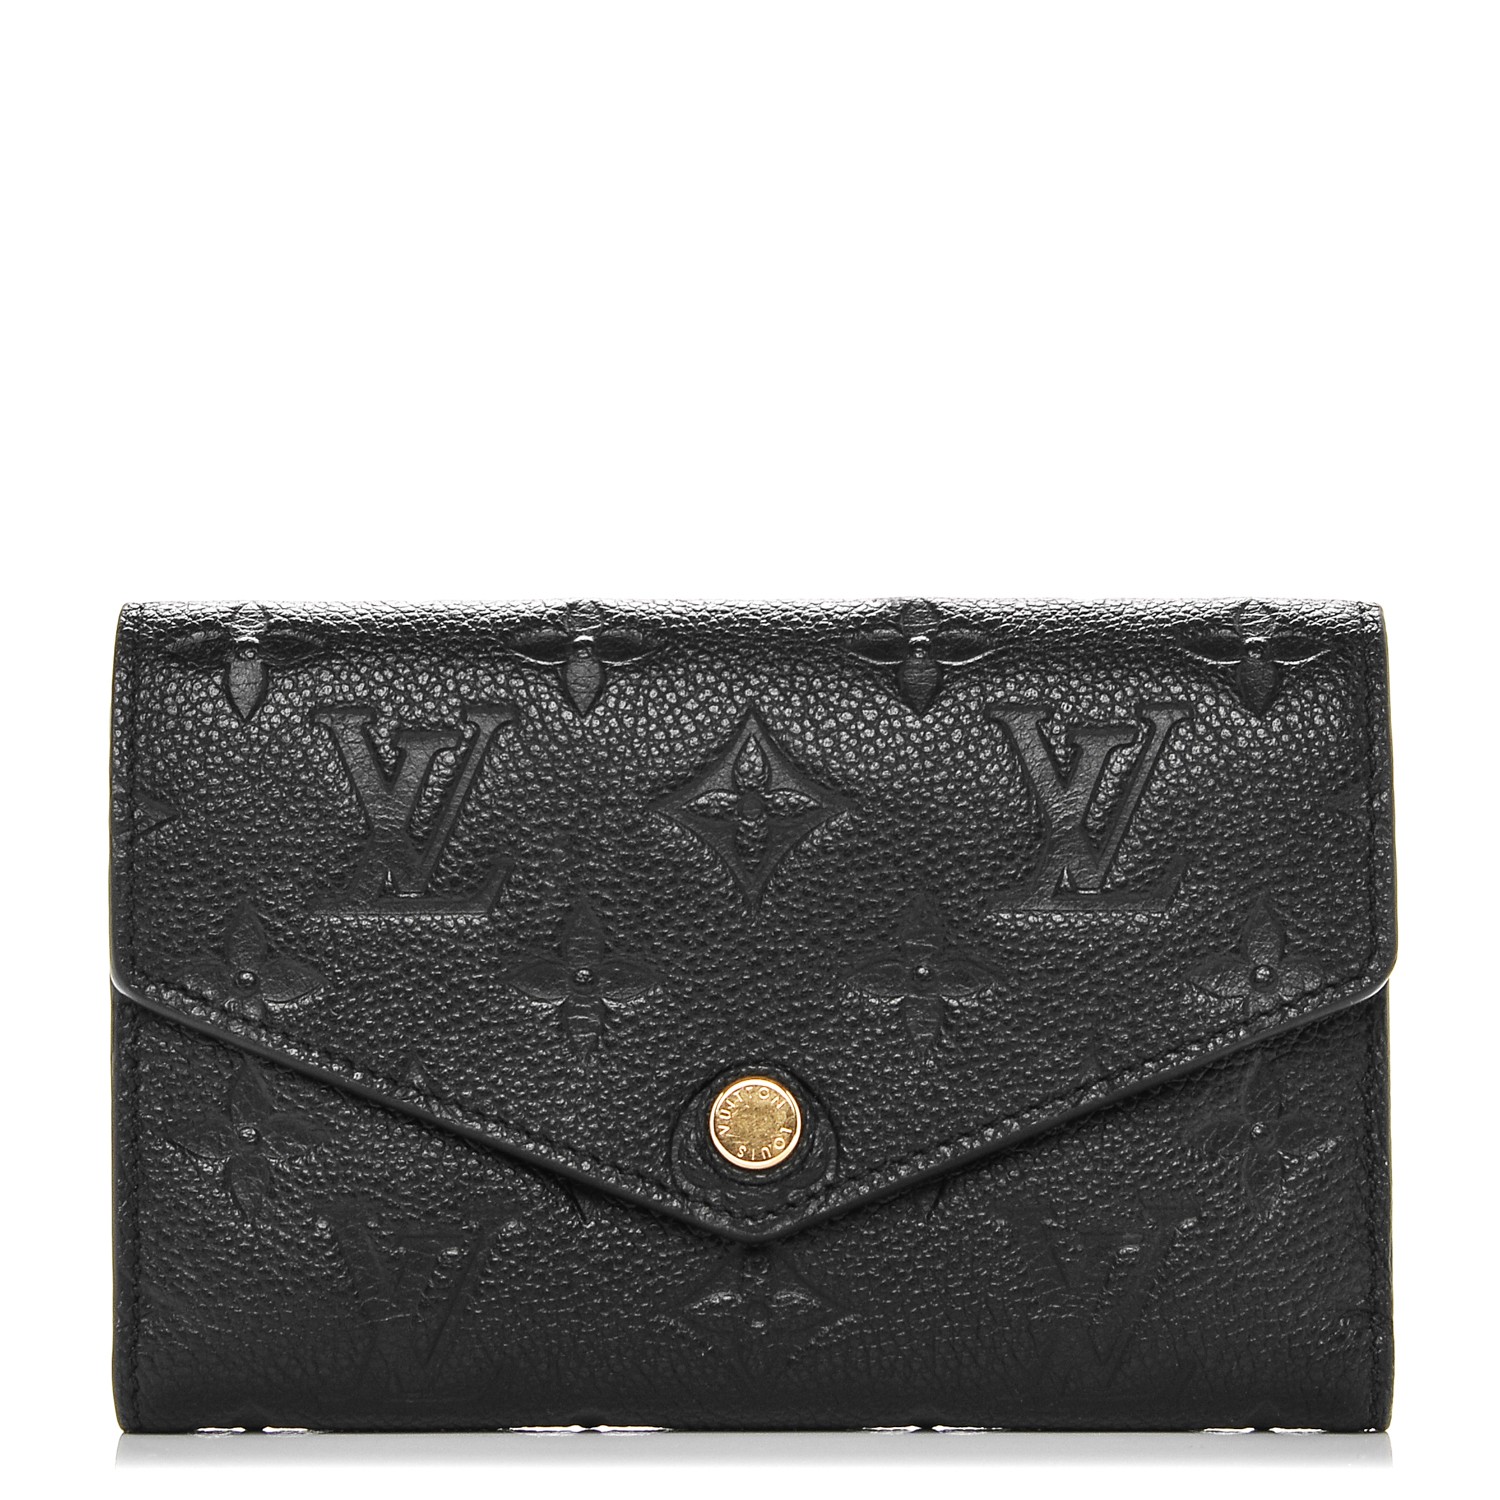 LOUIS VUITTON Empreinte Compact Curieuse Wallet Black 183945